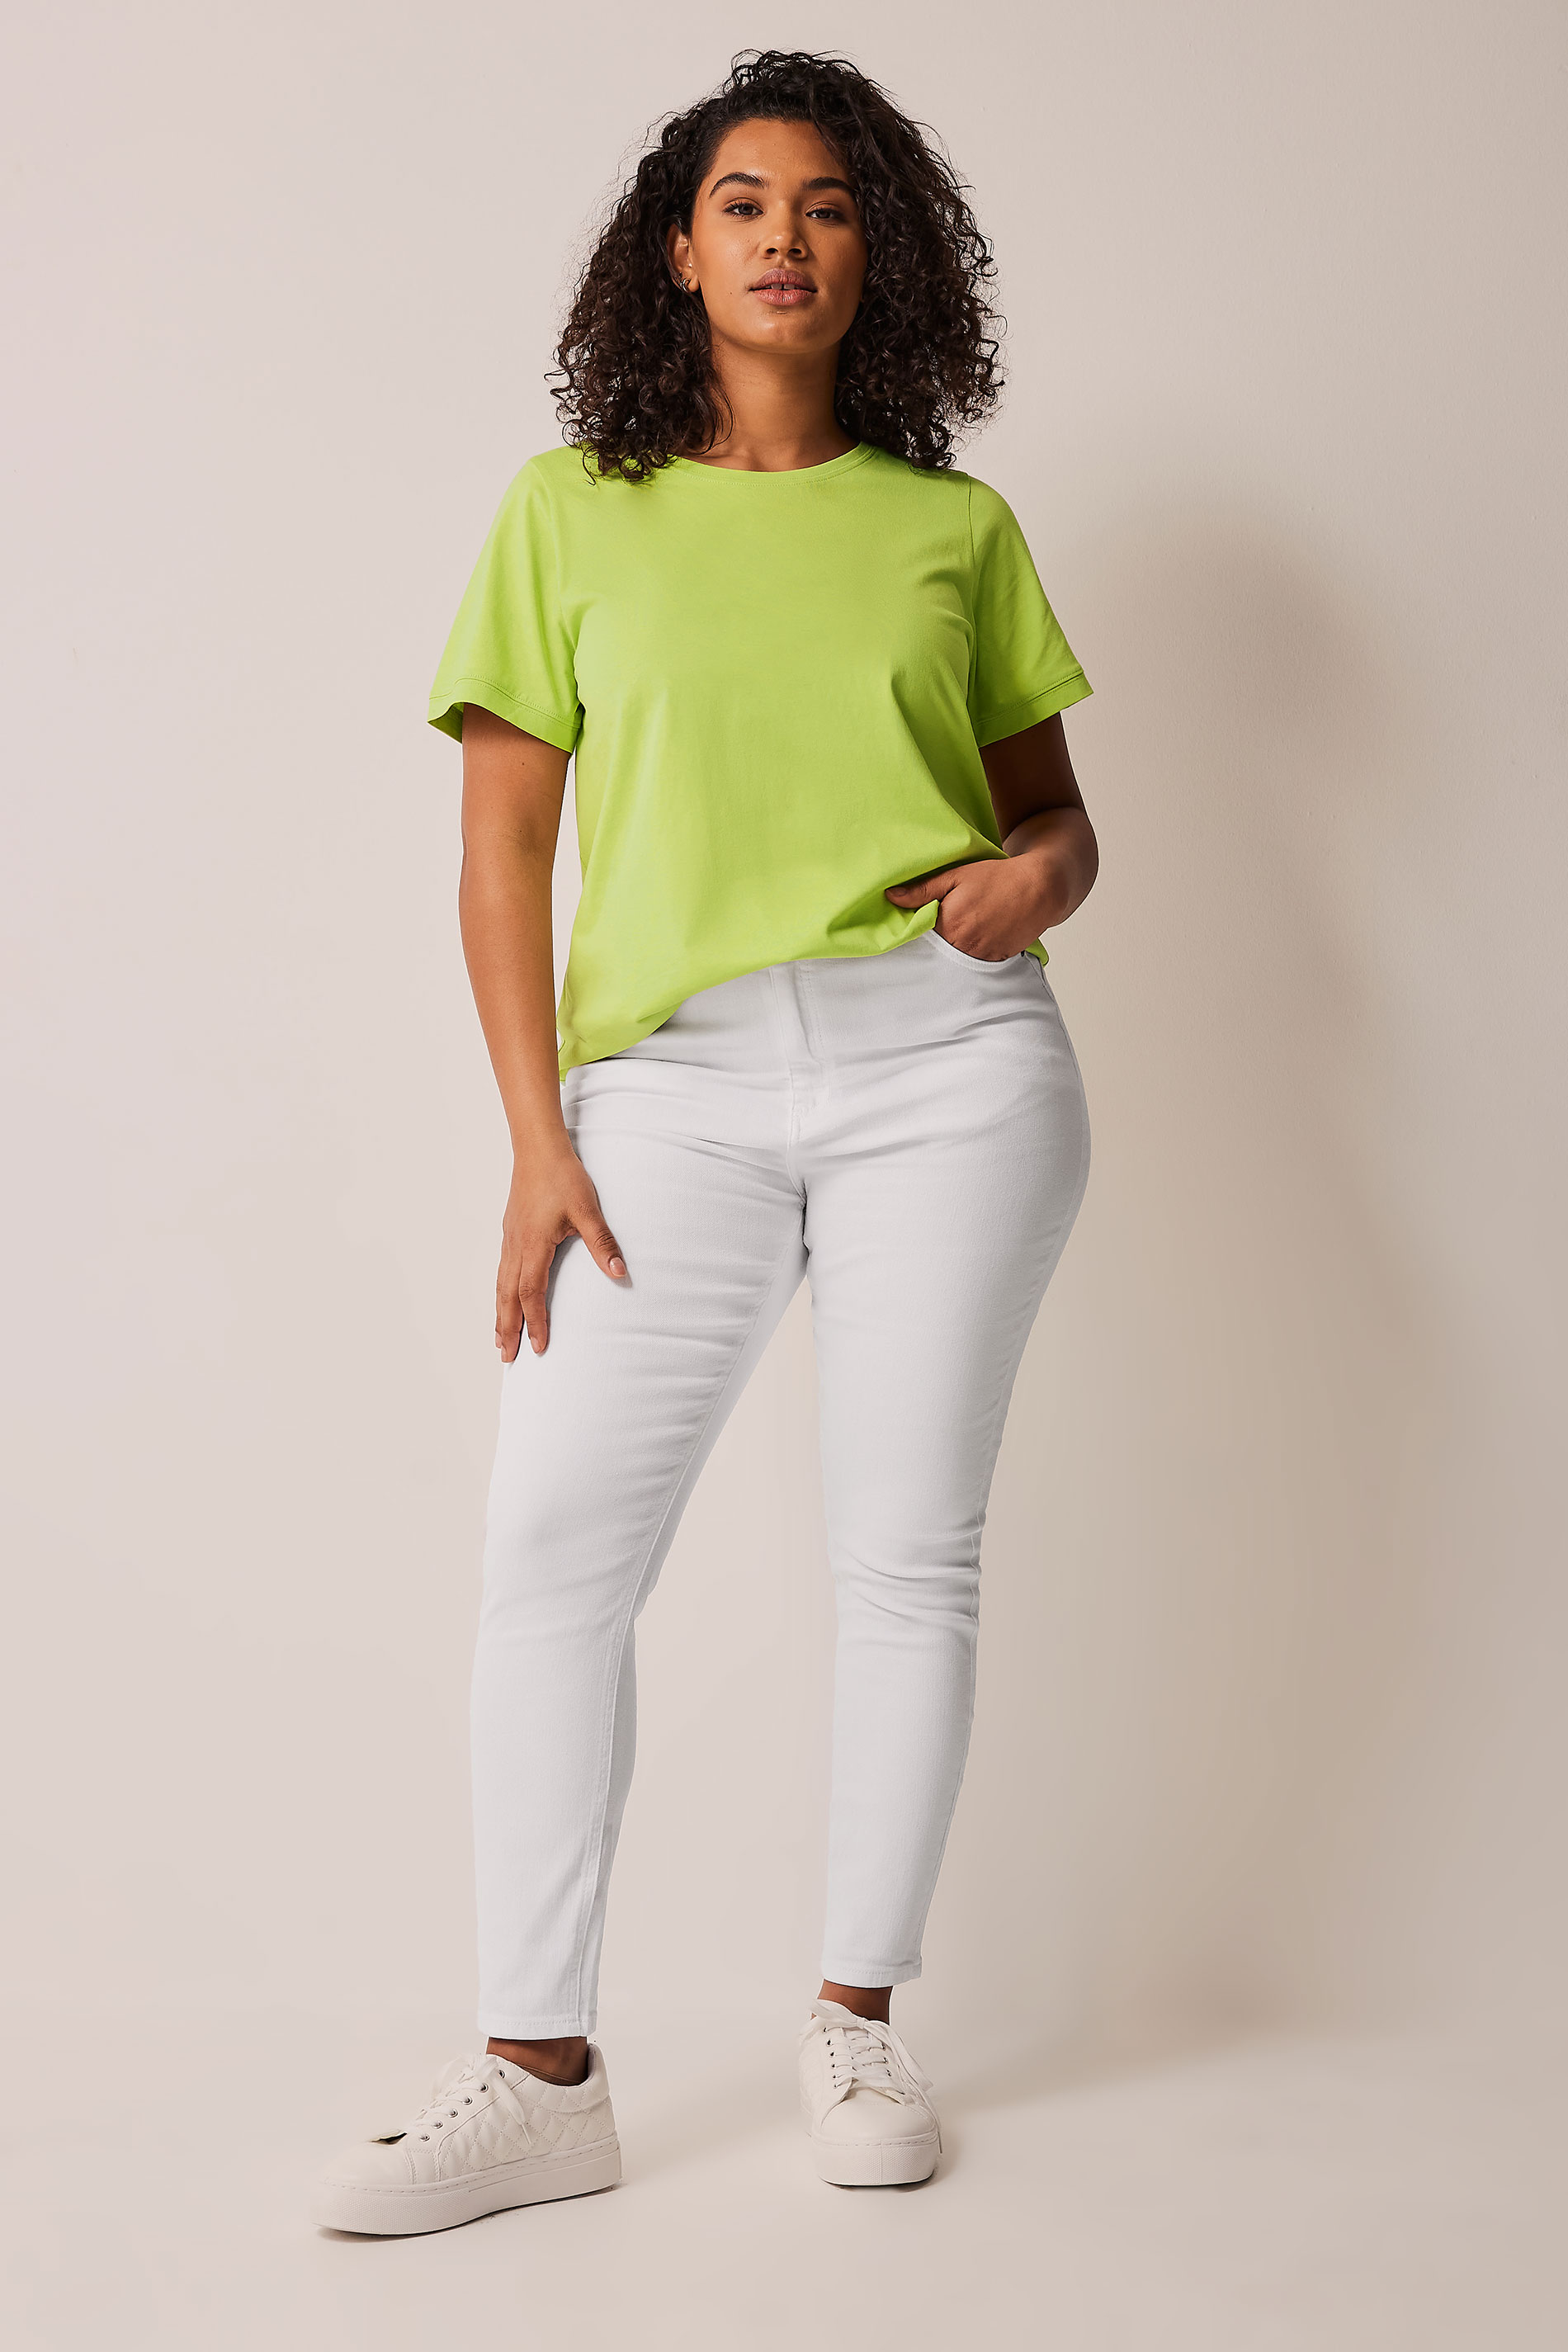 EVANS Plus Size Lime Green Essential T-Shirt | Evans 2